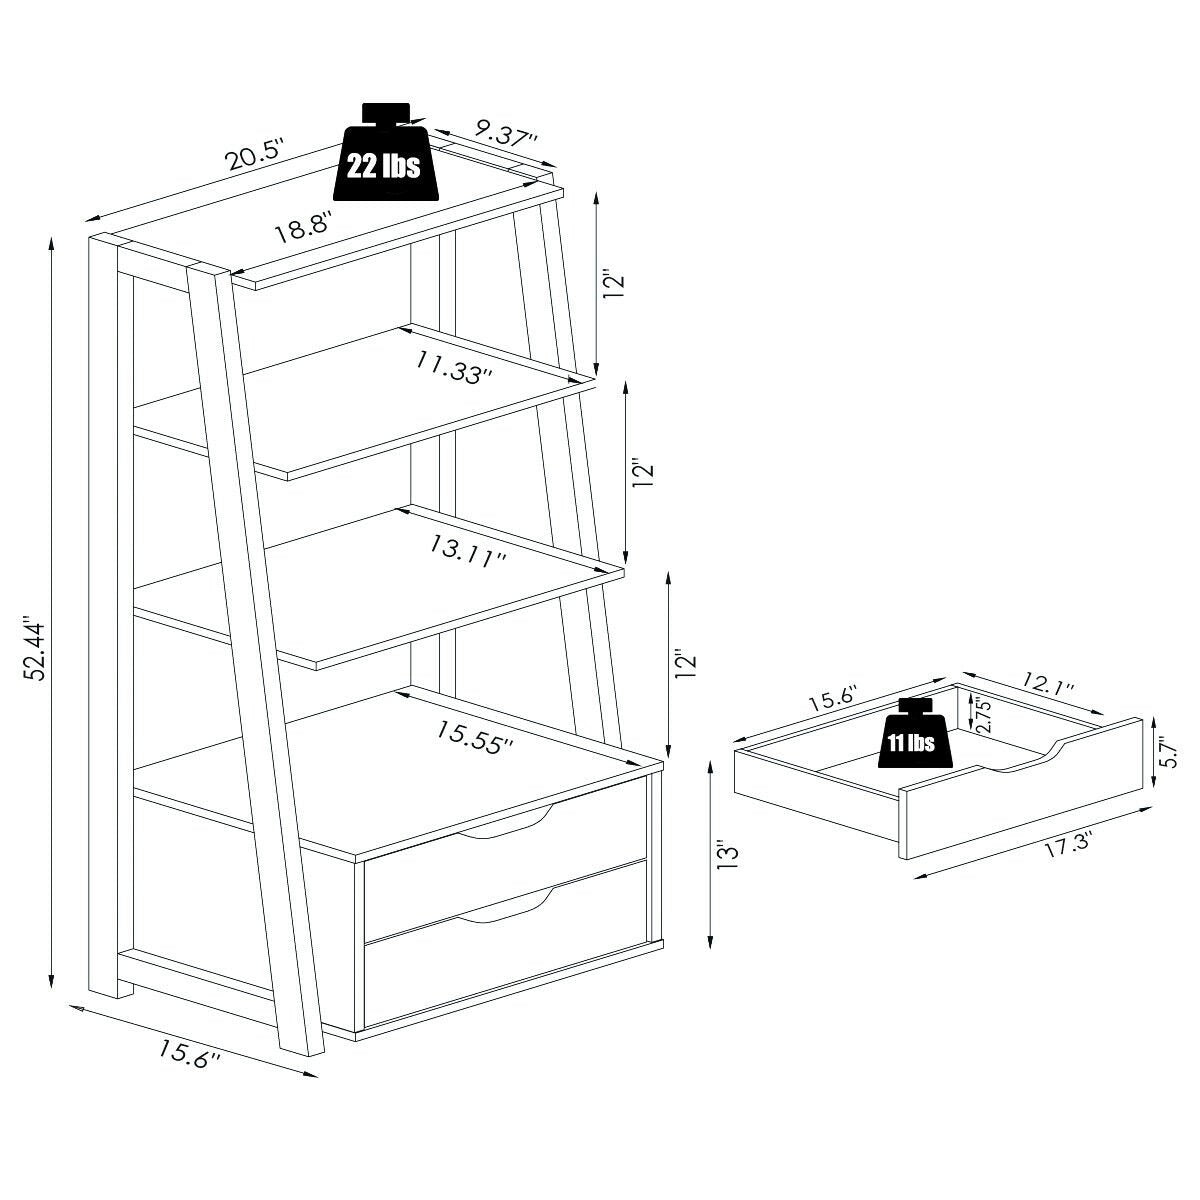 4-Tier Ladder Bookshelf Storage Display with 2 Drawers, Black